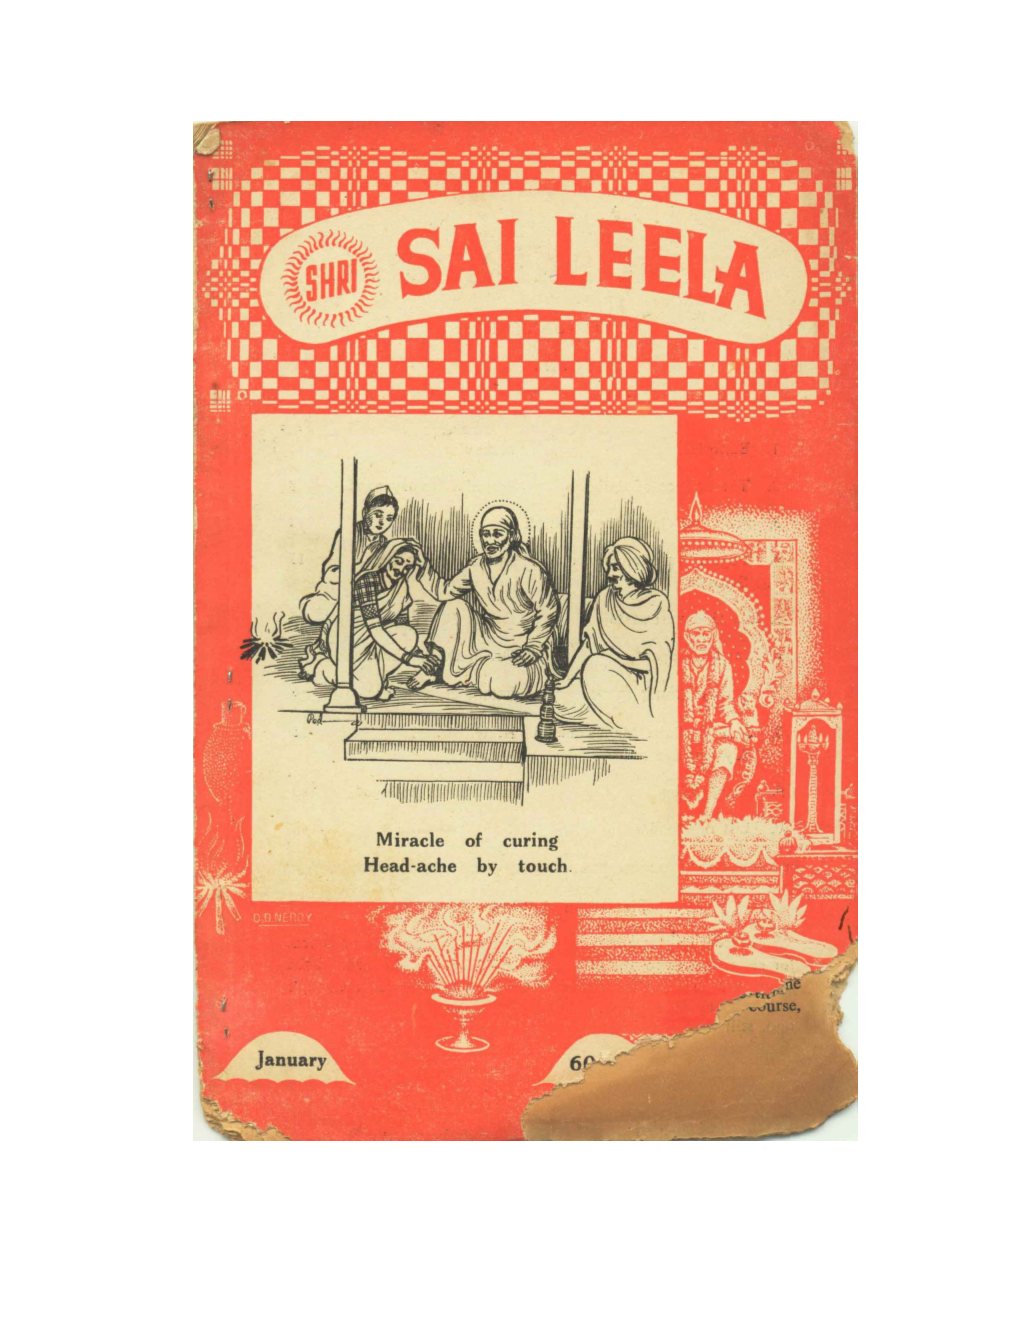 Shri Sai Leela